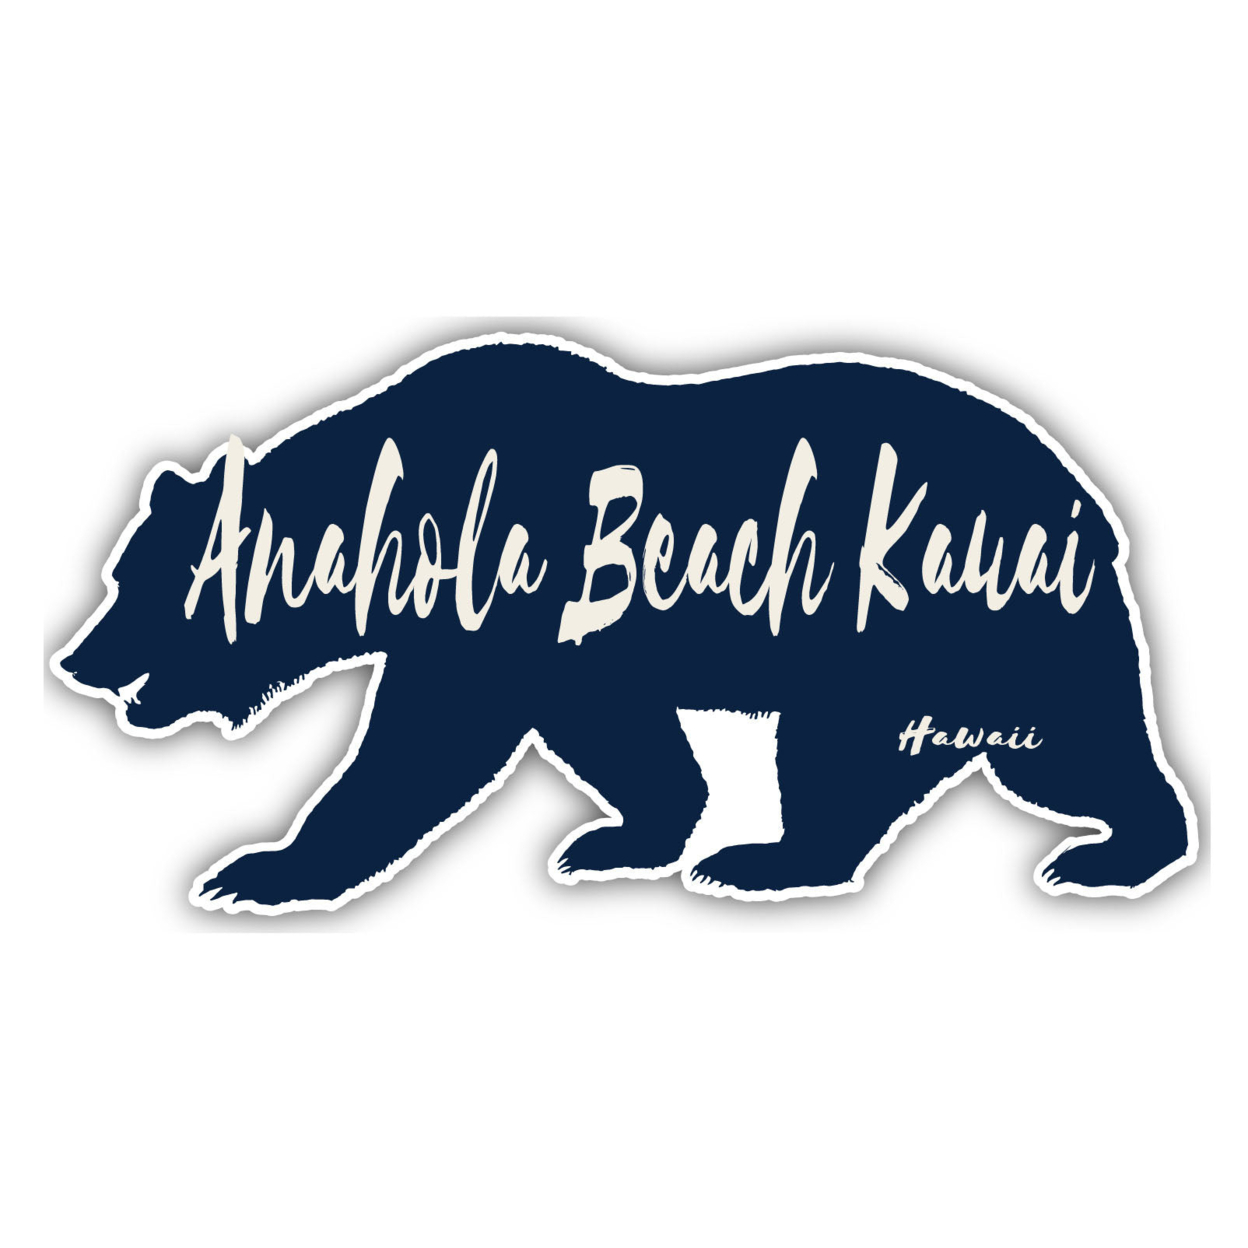 Anahola Beach Kauai Hawaii Souvenir Decorative Stickers (Choose Theme And Size) - 4-Pack, 2-Inch, Bear